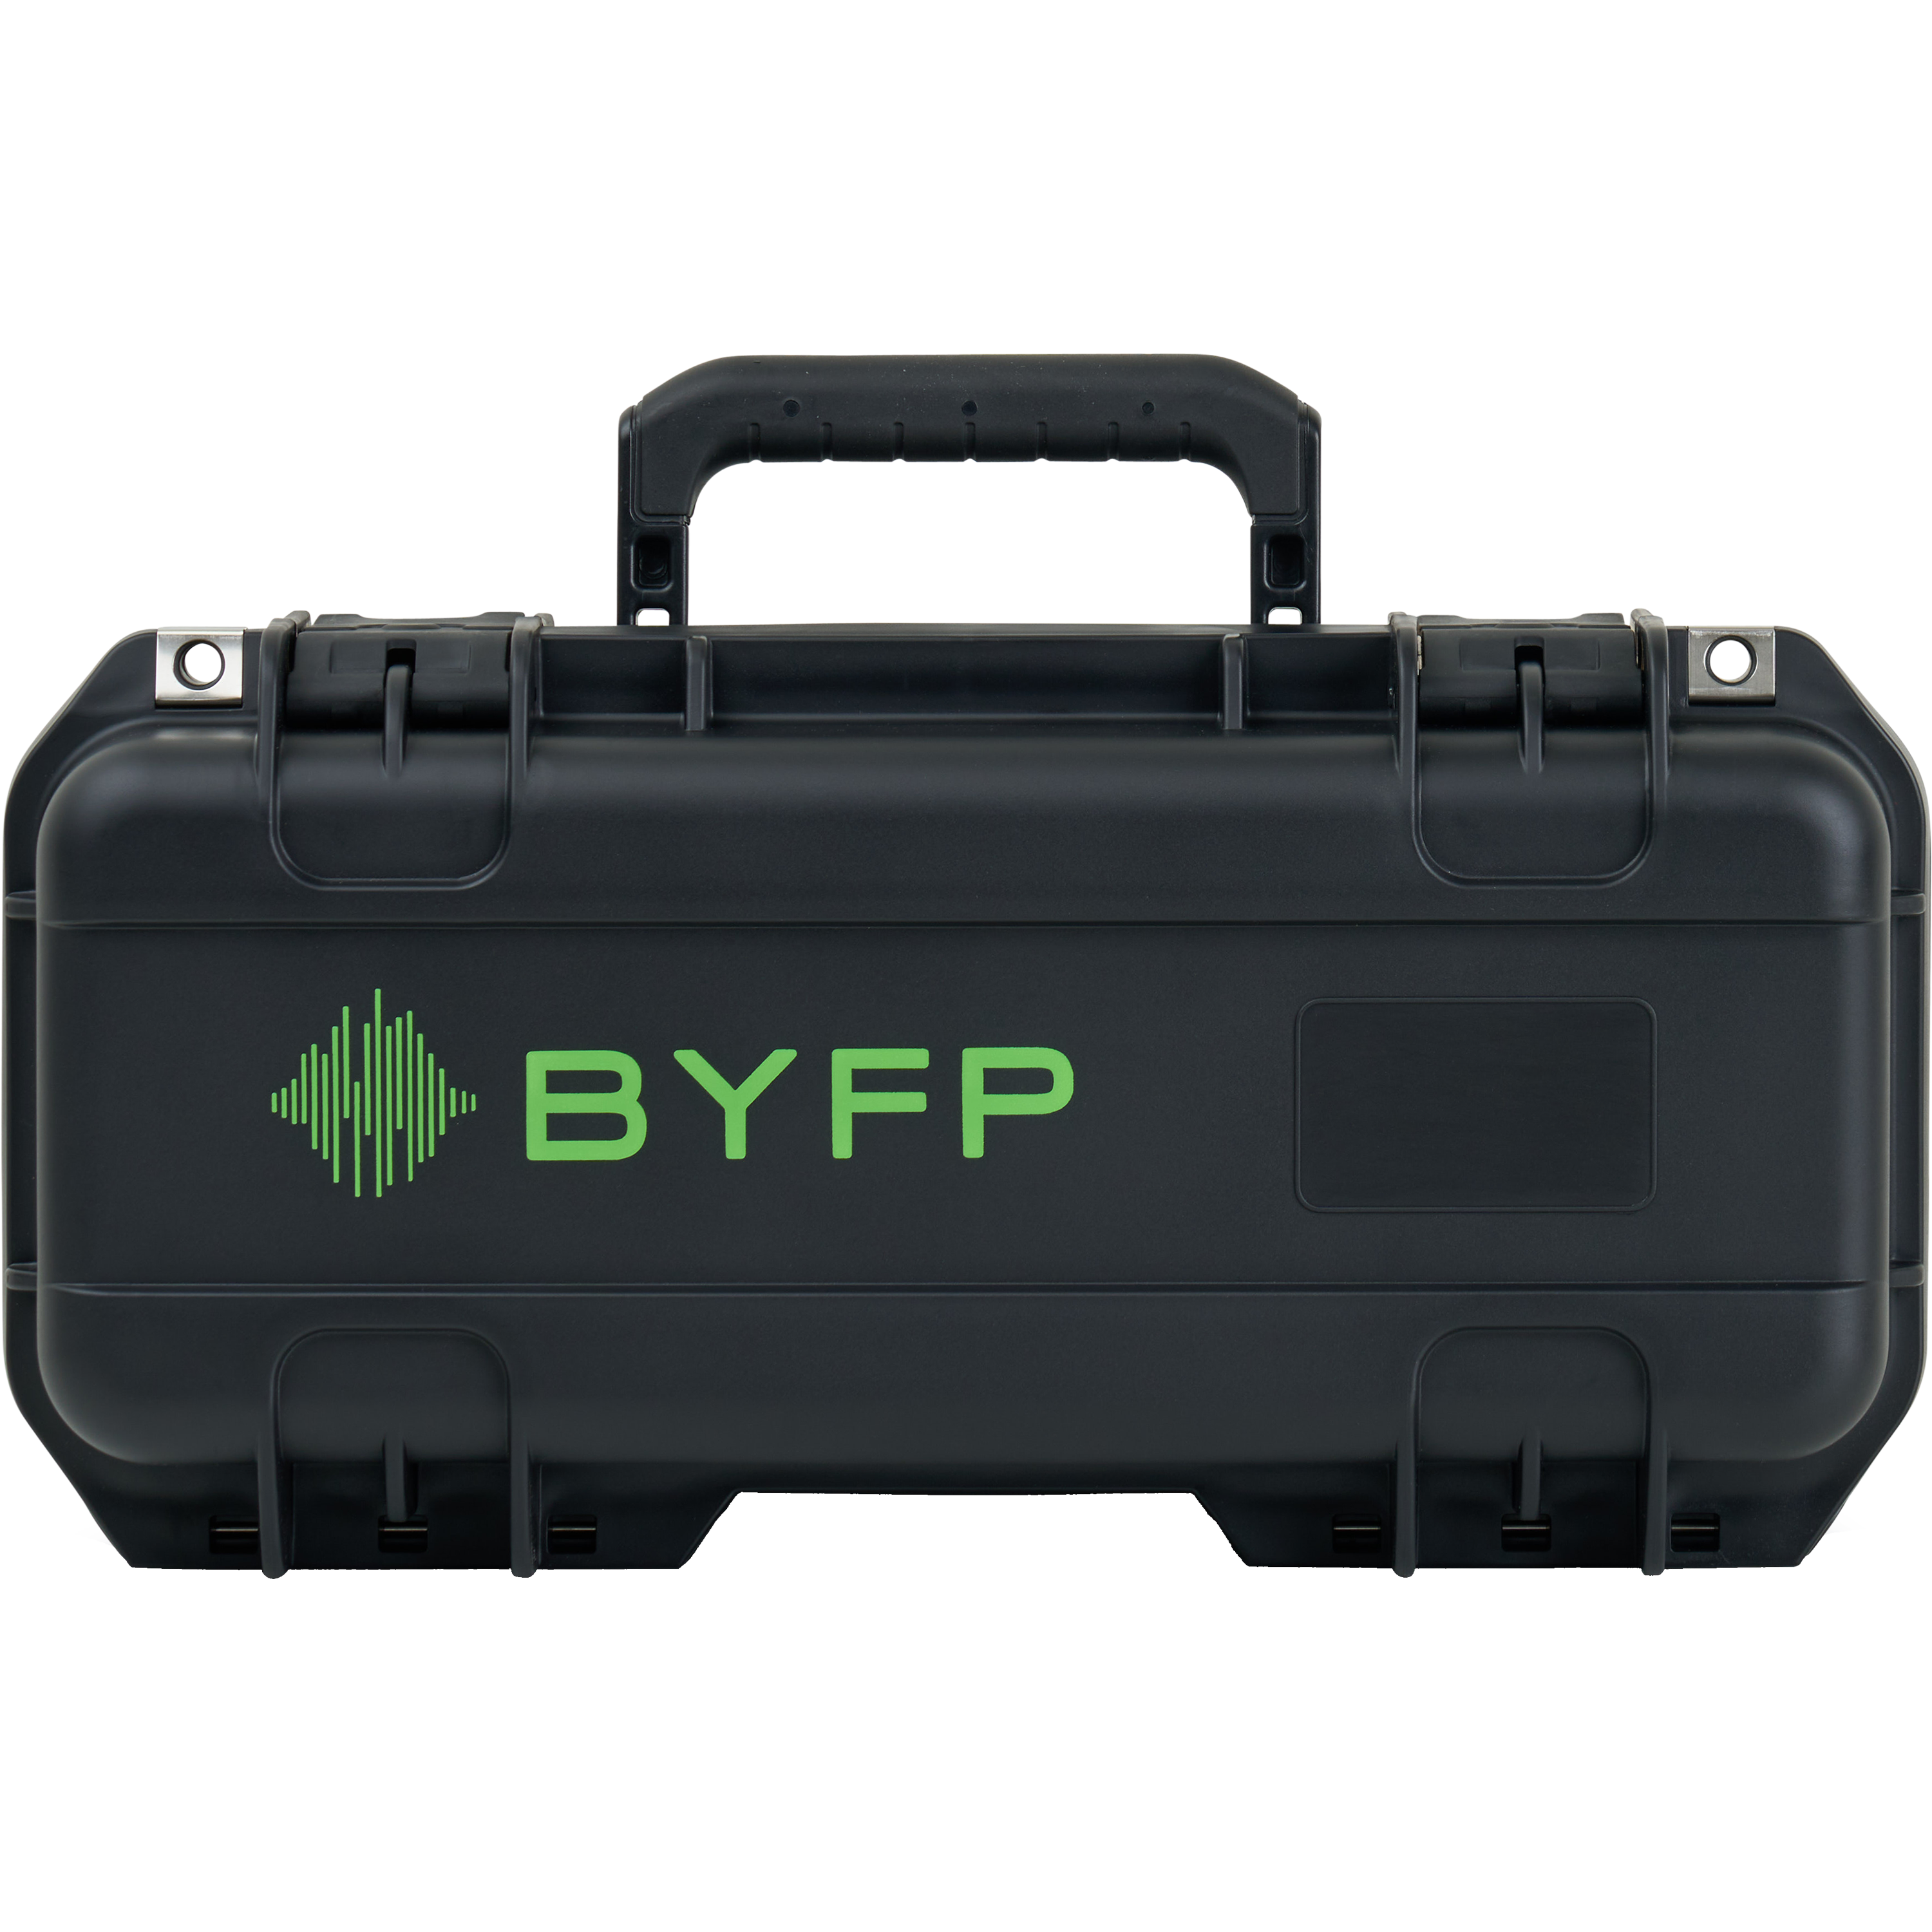 BYFP ipCase for 2x Shure ULX-D Gooseneck